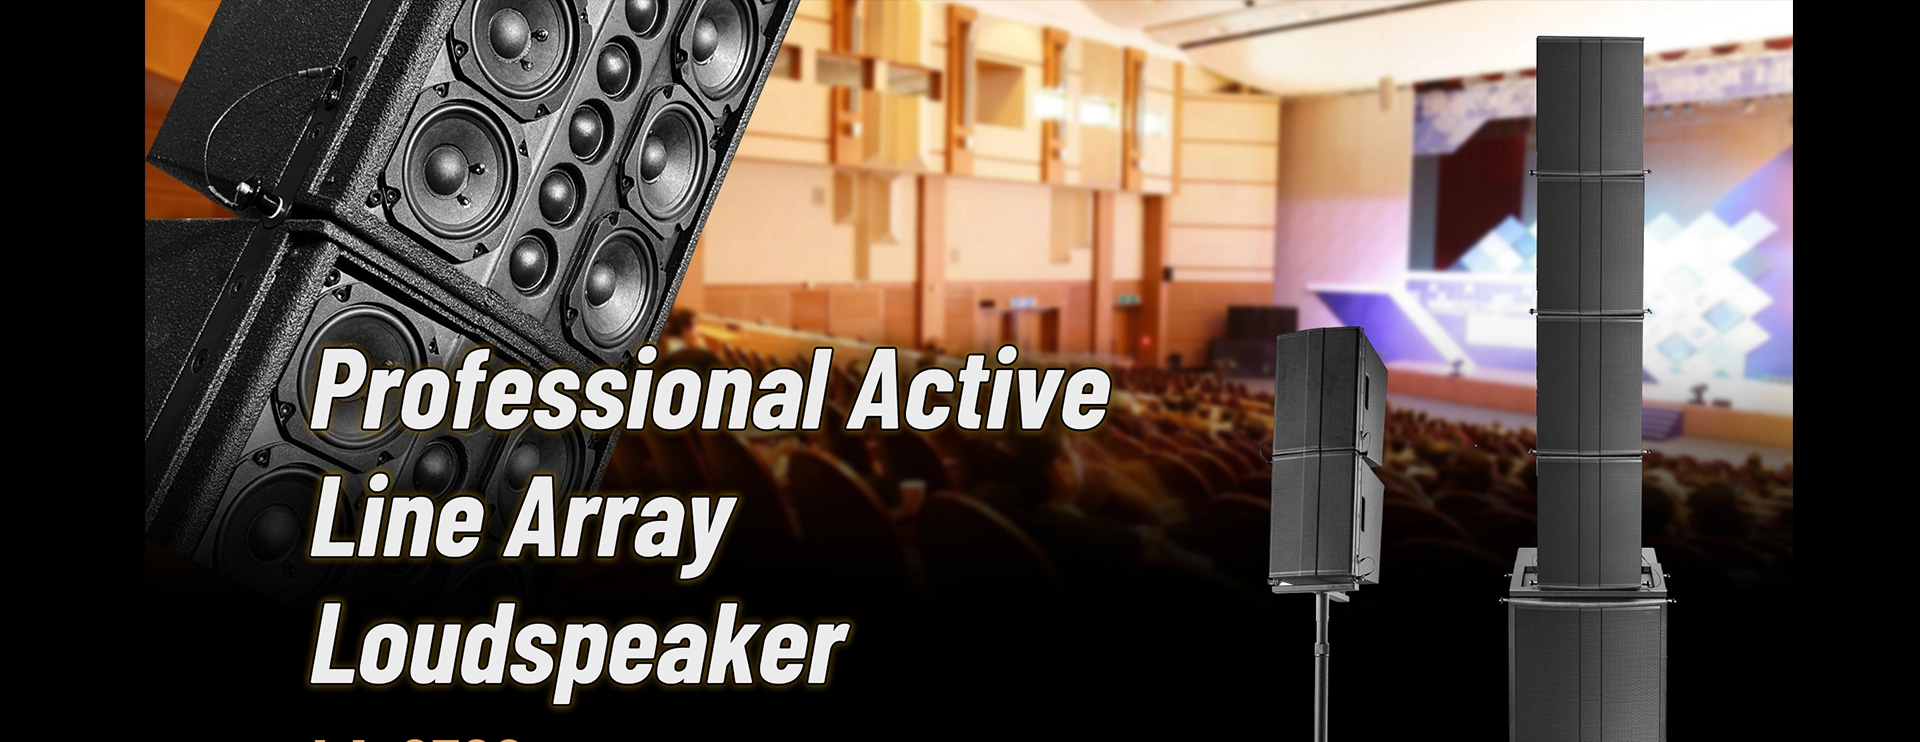 Professional Active Line Array Loudspeaker System